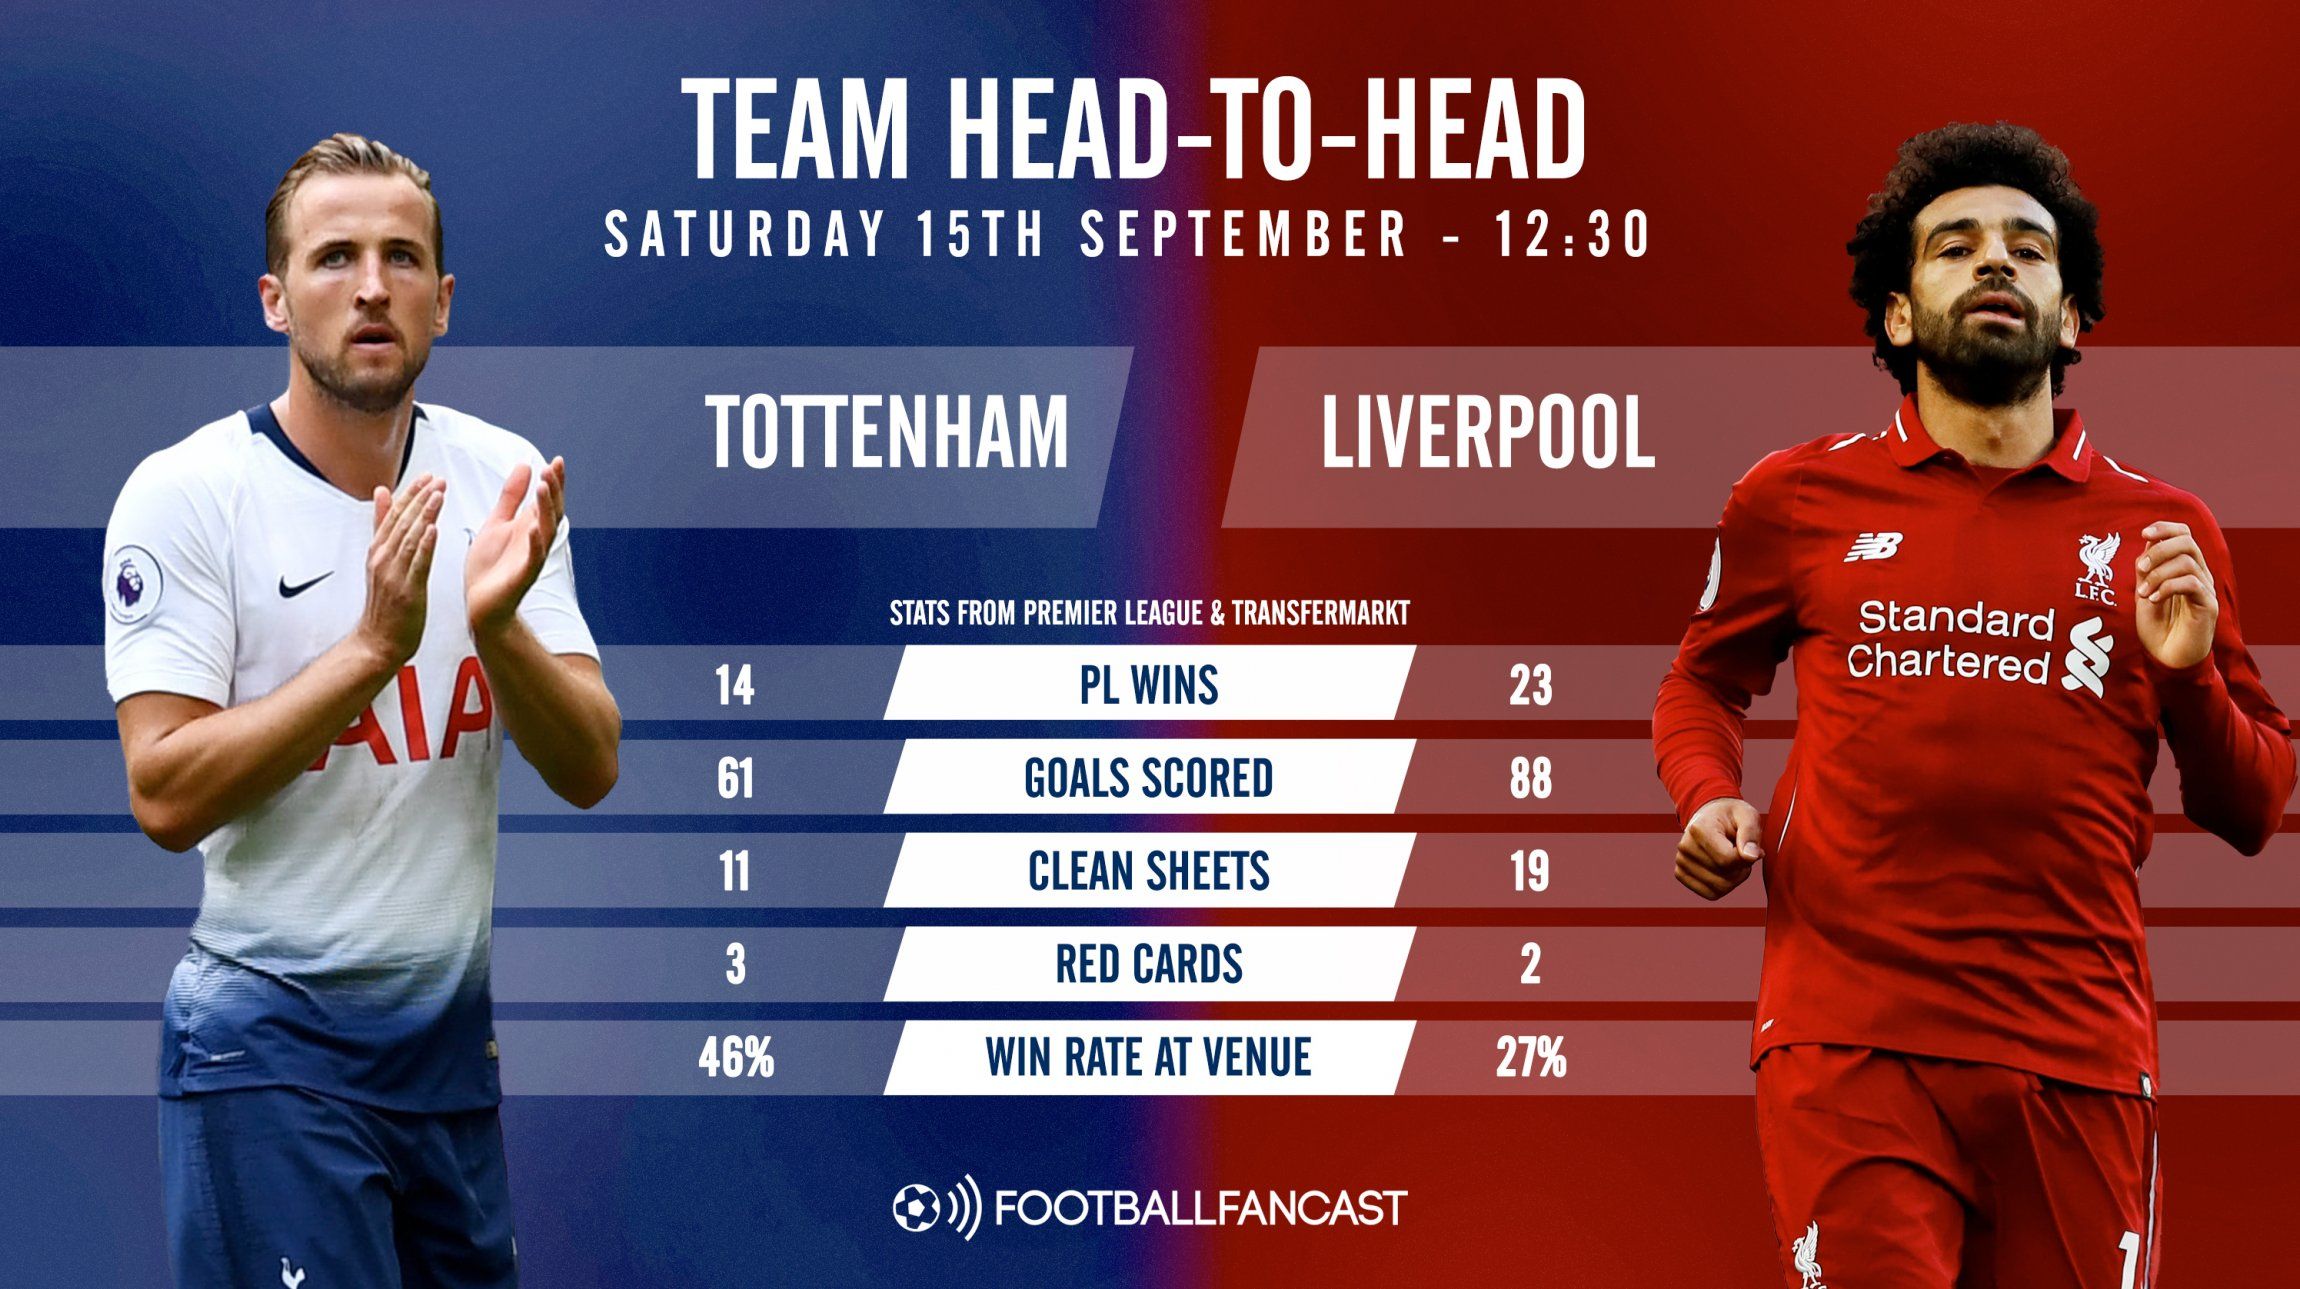 Tottenham vs Liverpool - Head to Head